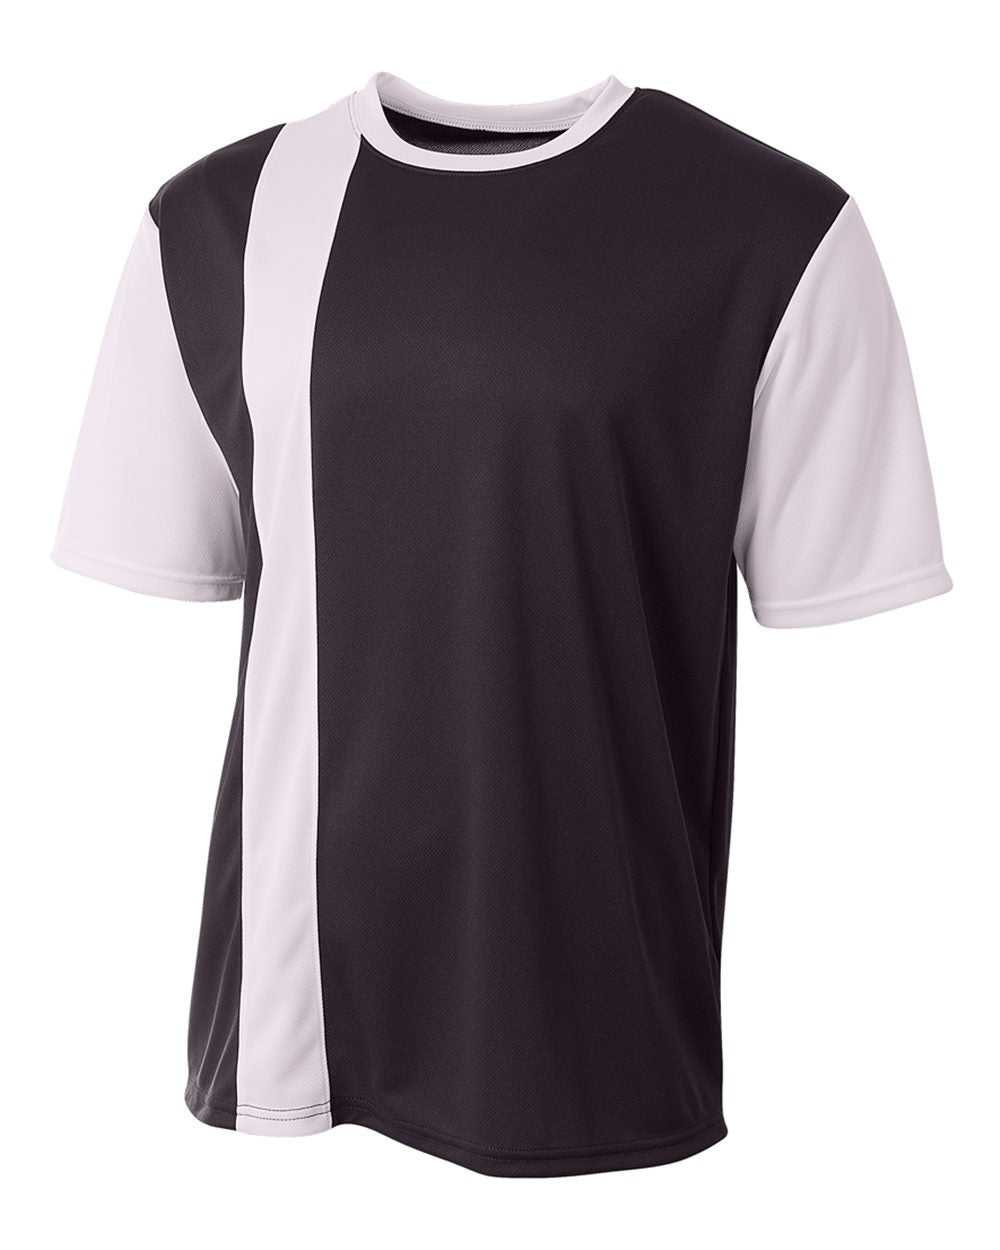 A4 N3016 Legend Soccer Jersey - Black White - HIT a Double